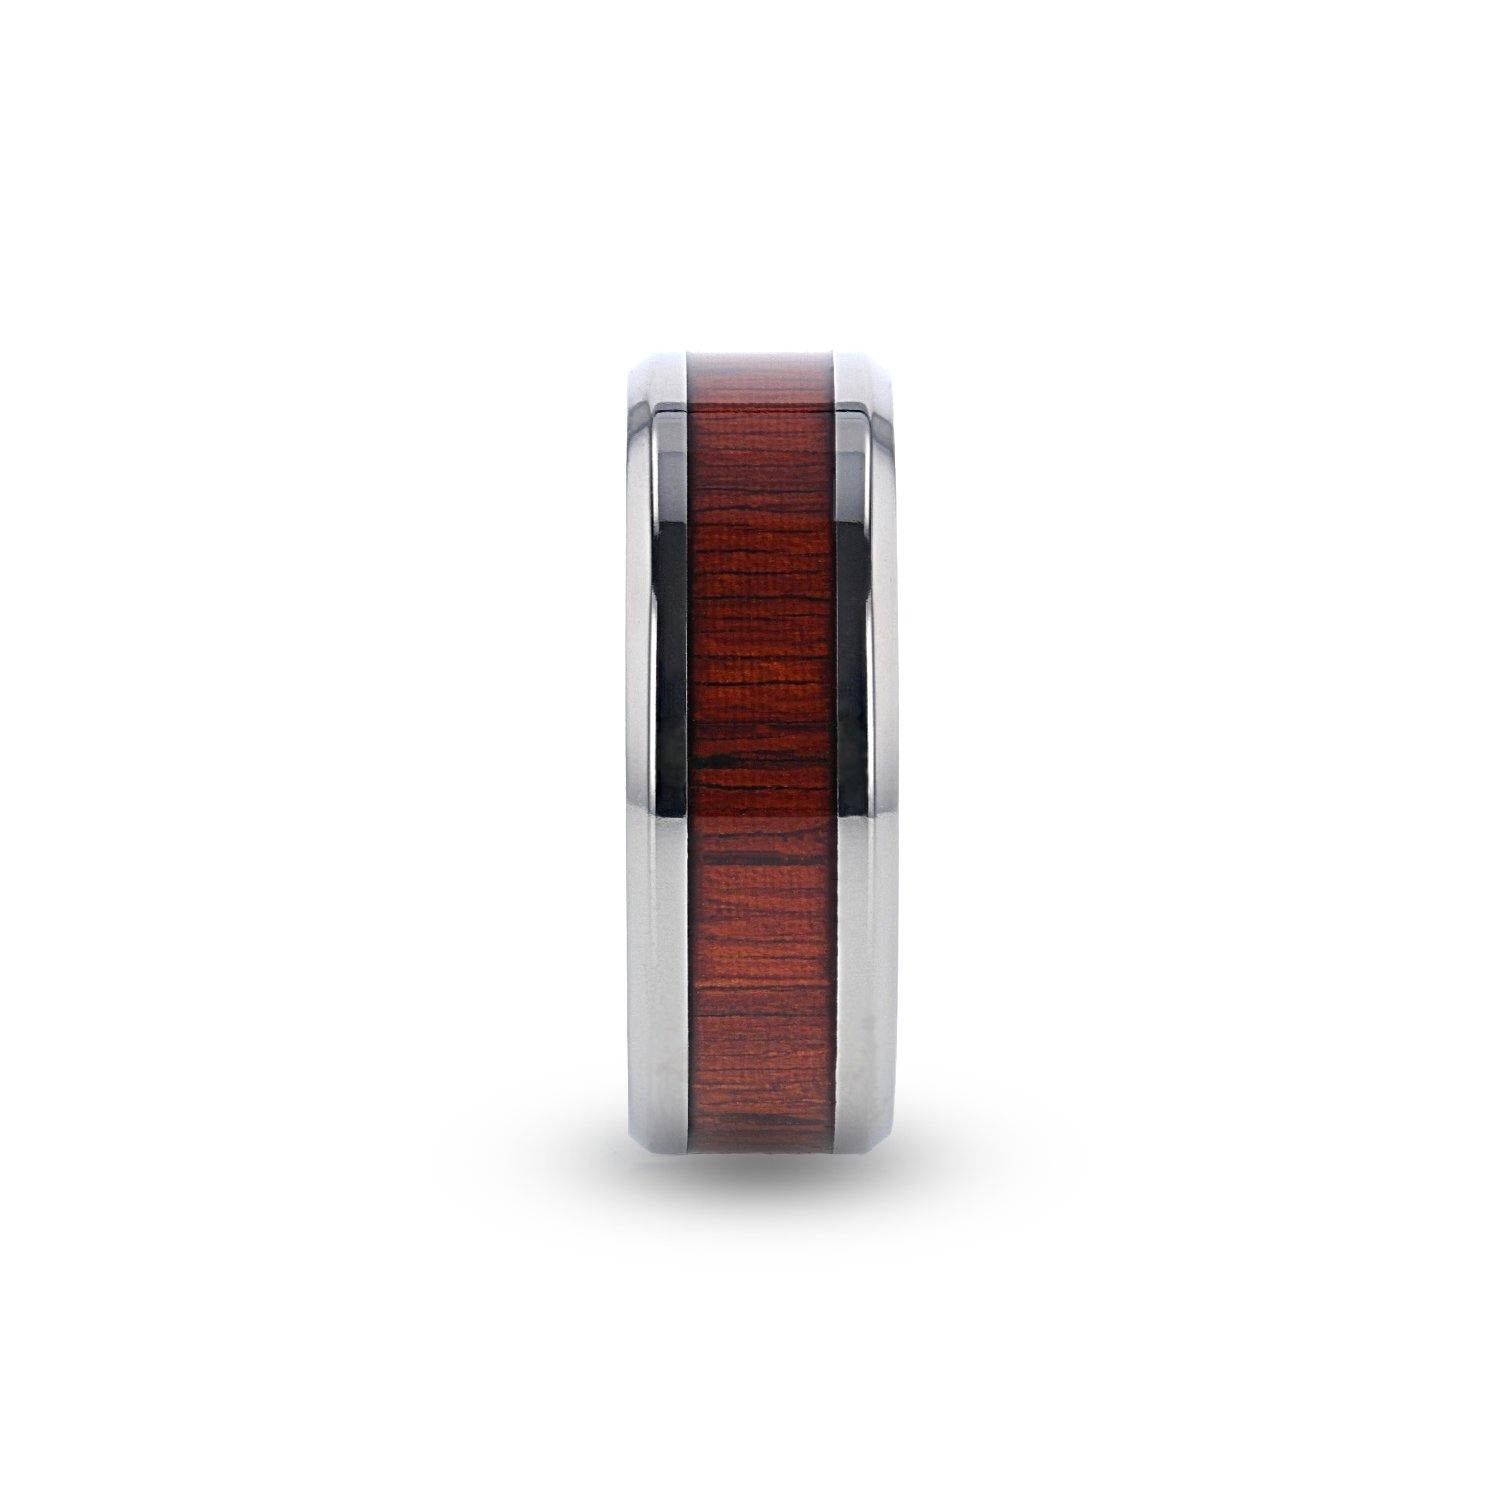 NORRO - Titanium Polished Beveled Edges Padauk Wood Inlaid Men’s Wedding Band - 8mm - The Rutile Ltd